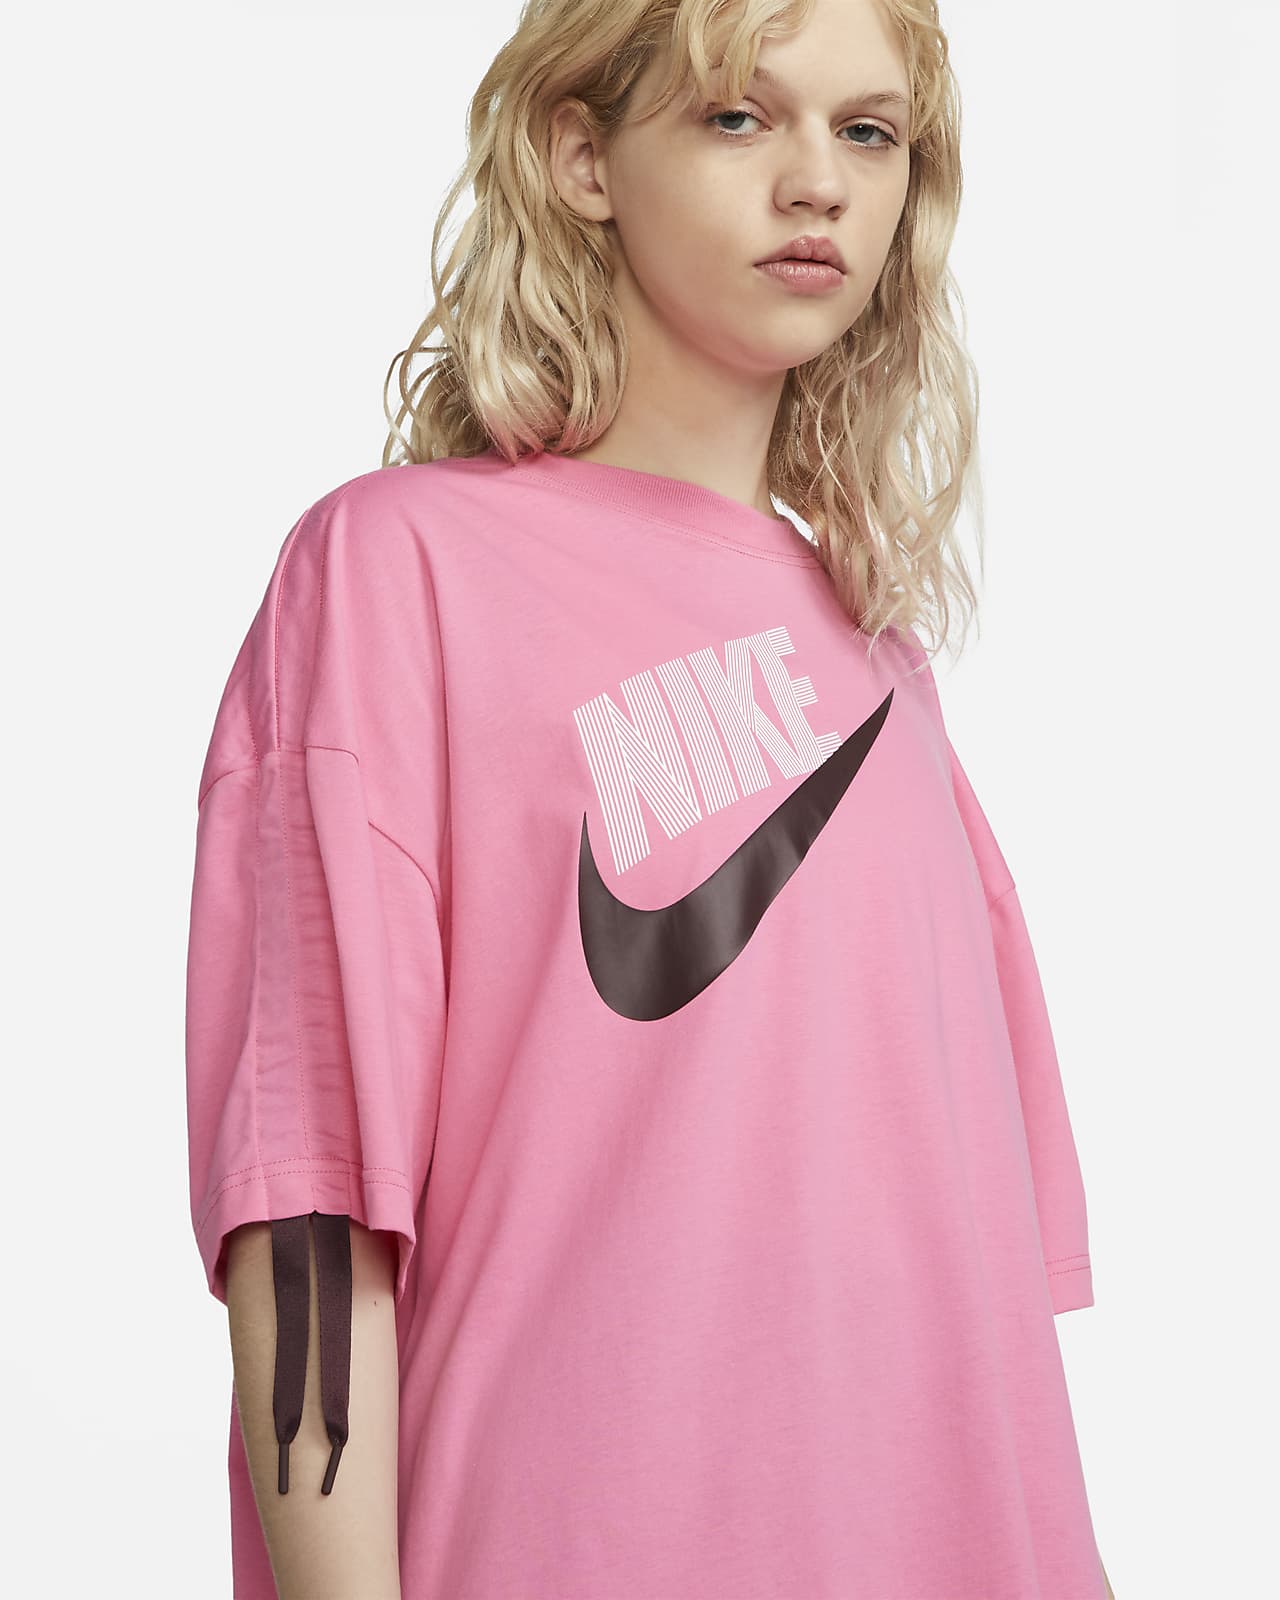 Nike Sportswear Women's Dance T-Shirt. Nike NL